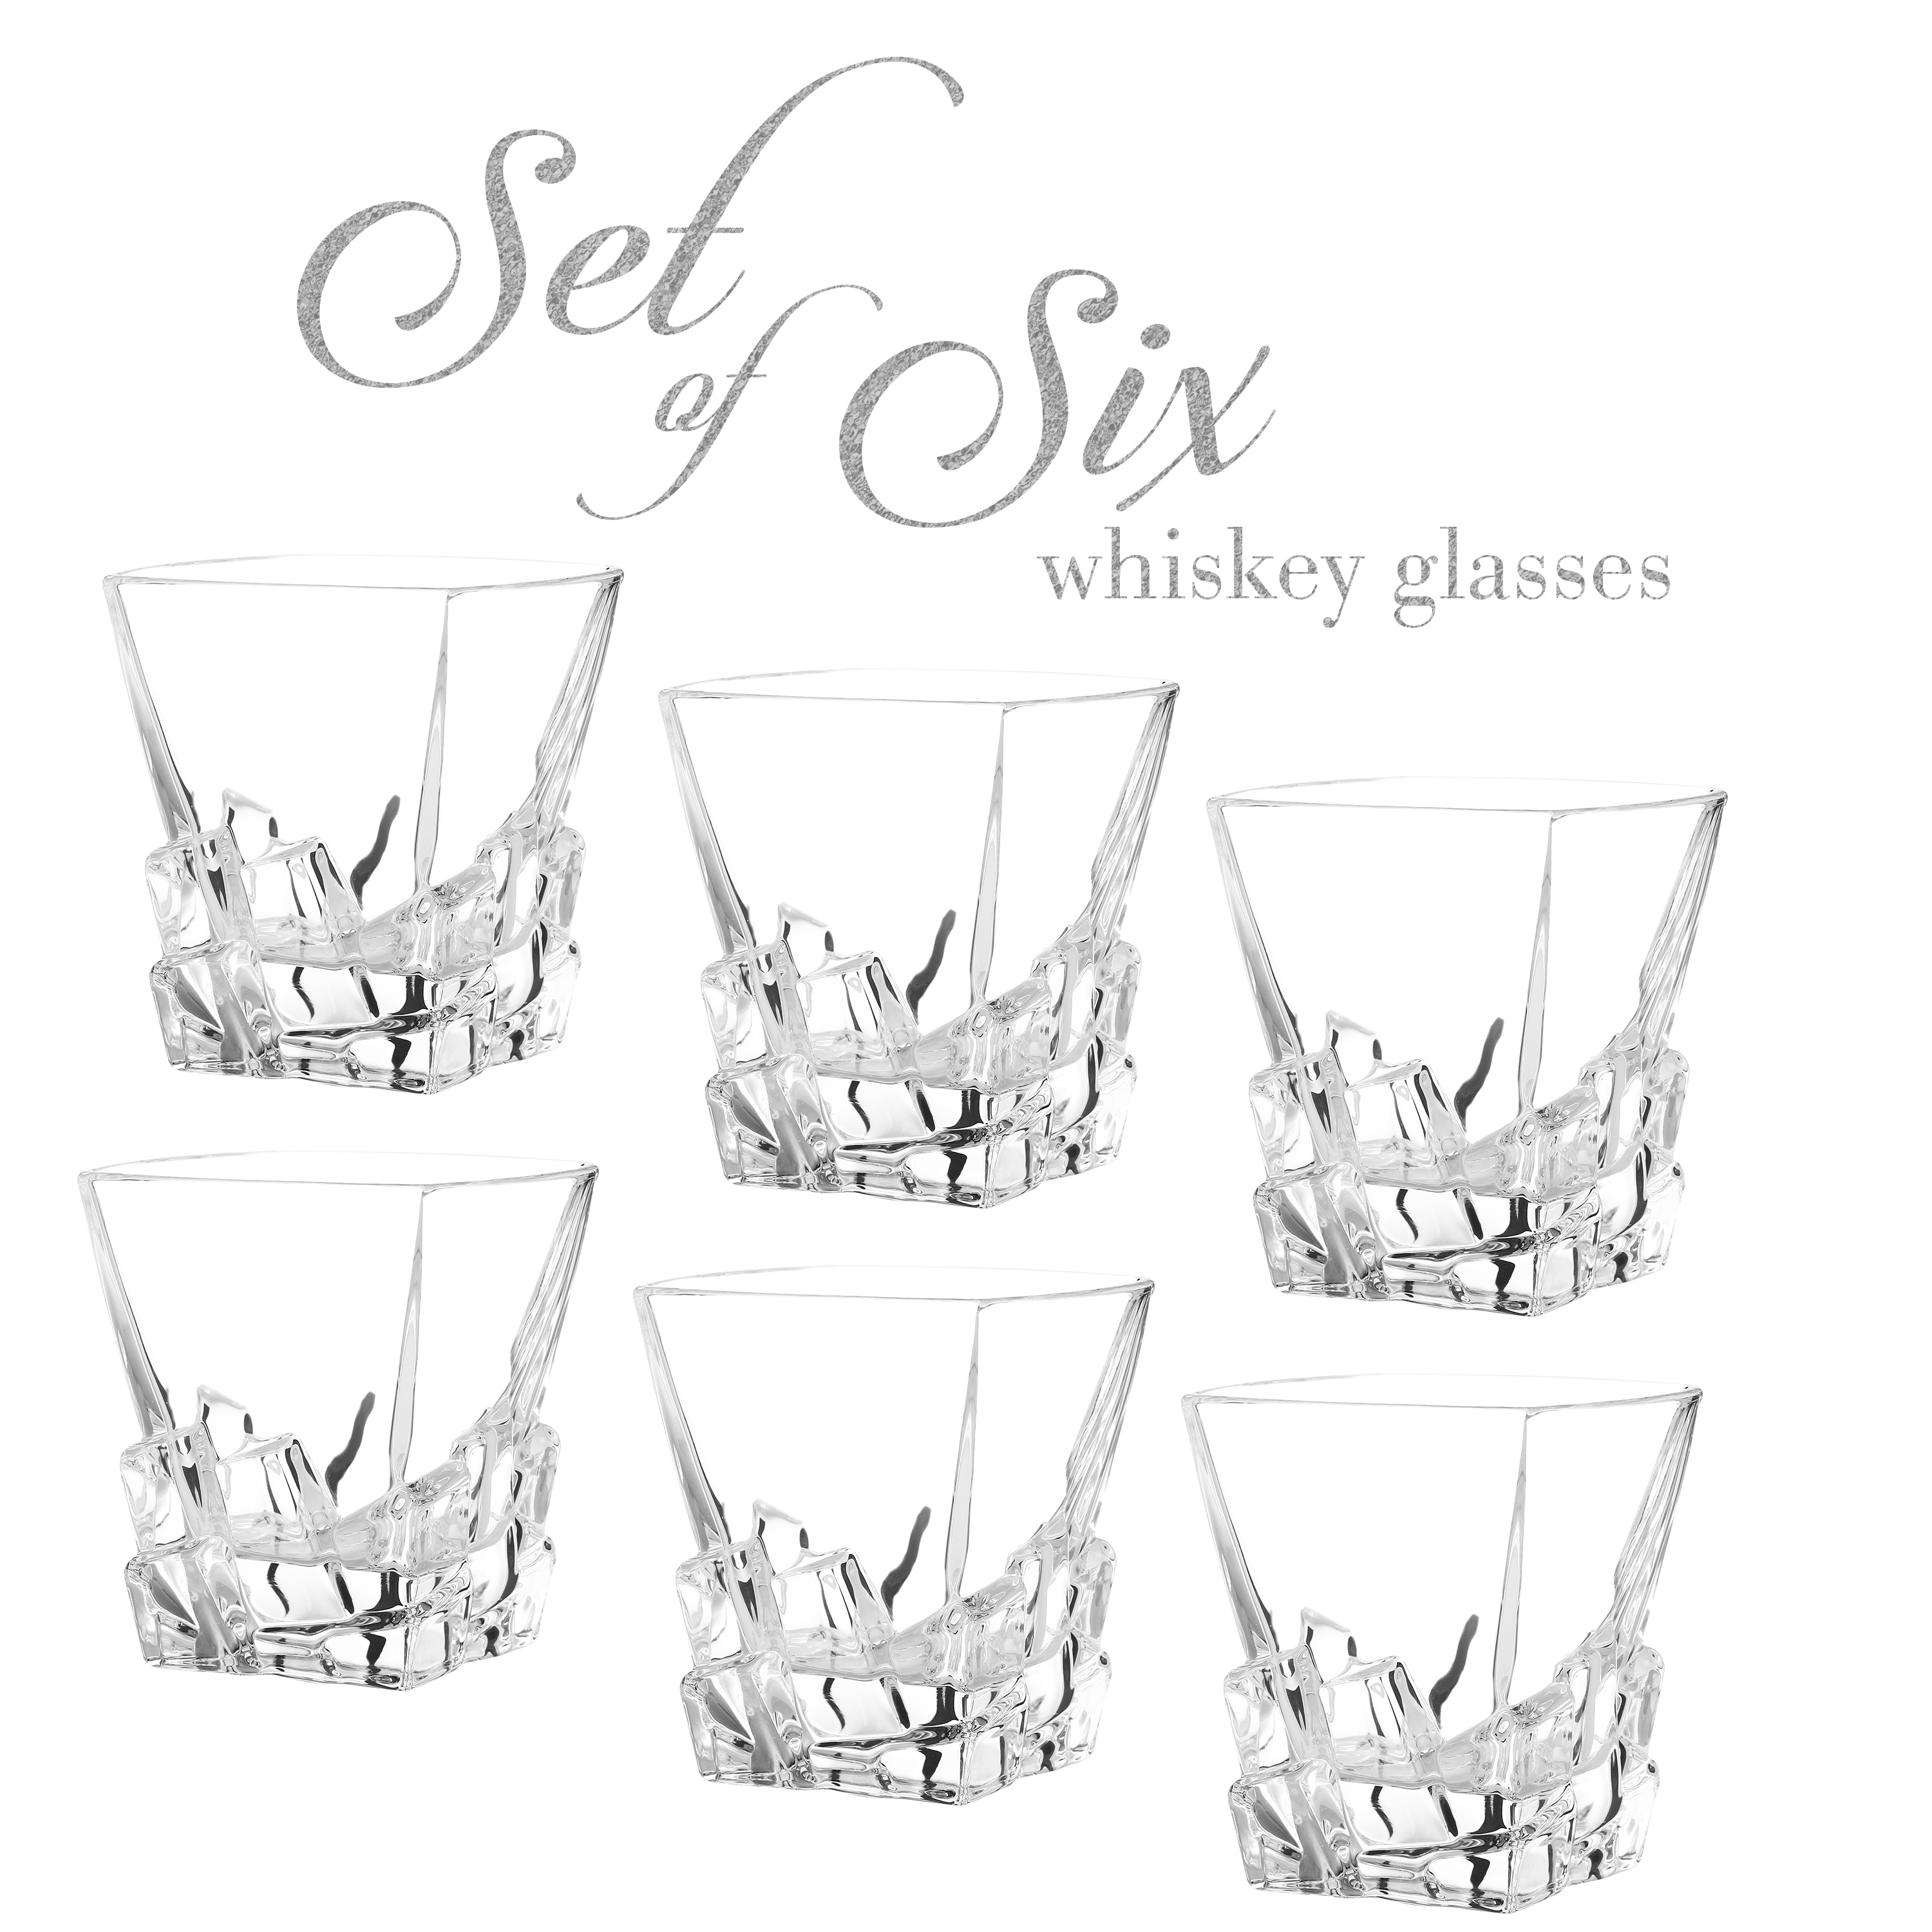 Berkware Lowball Whiskey Glasses - Modern Square Top Design